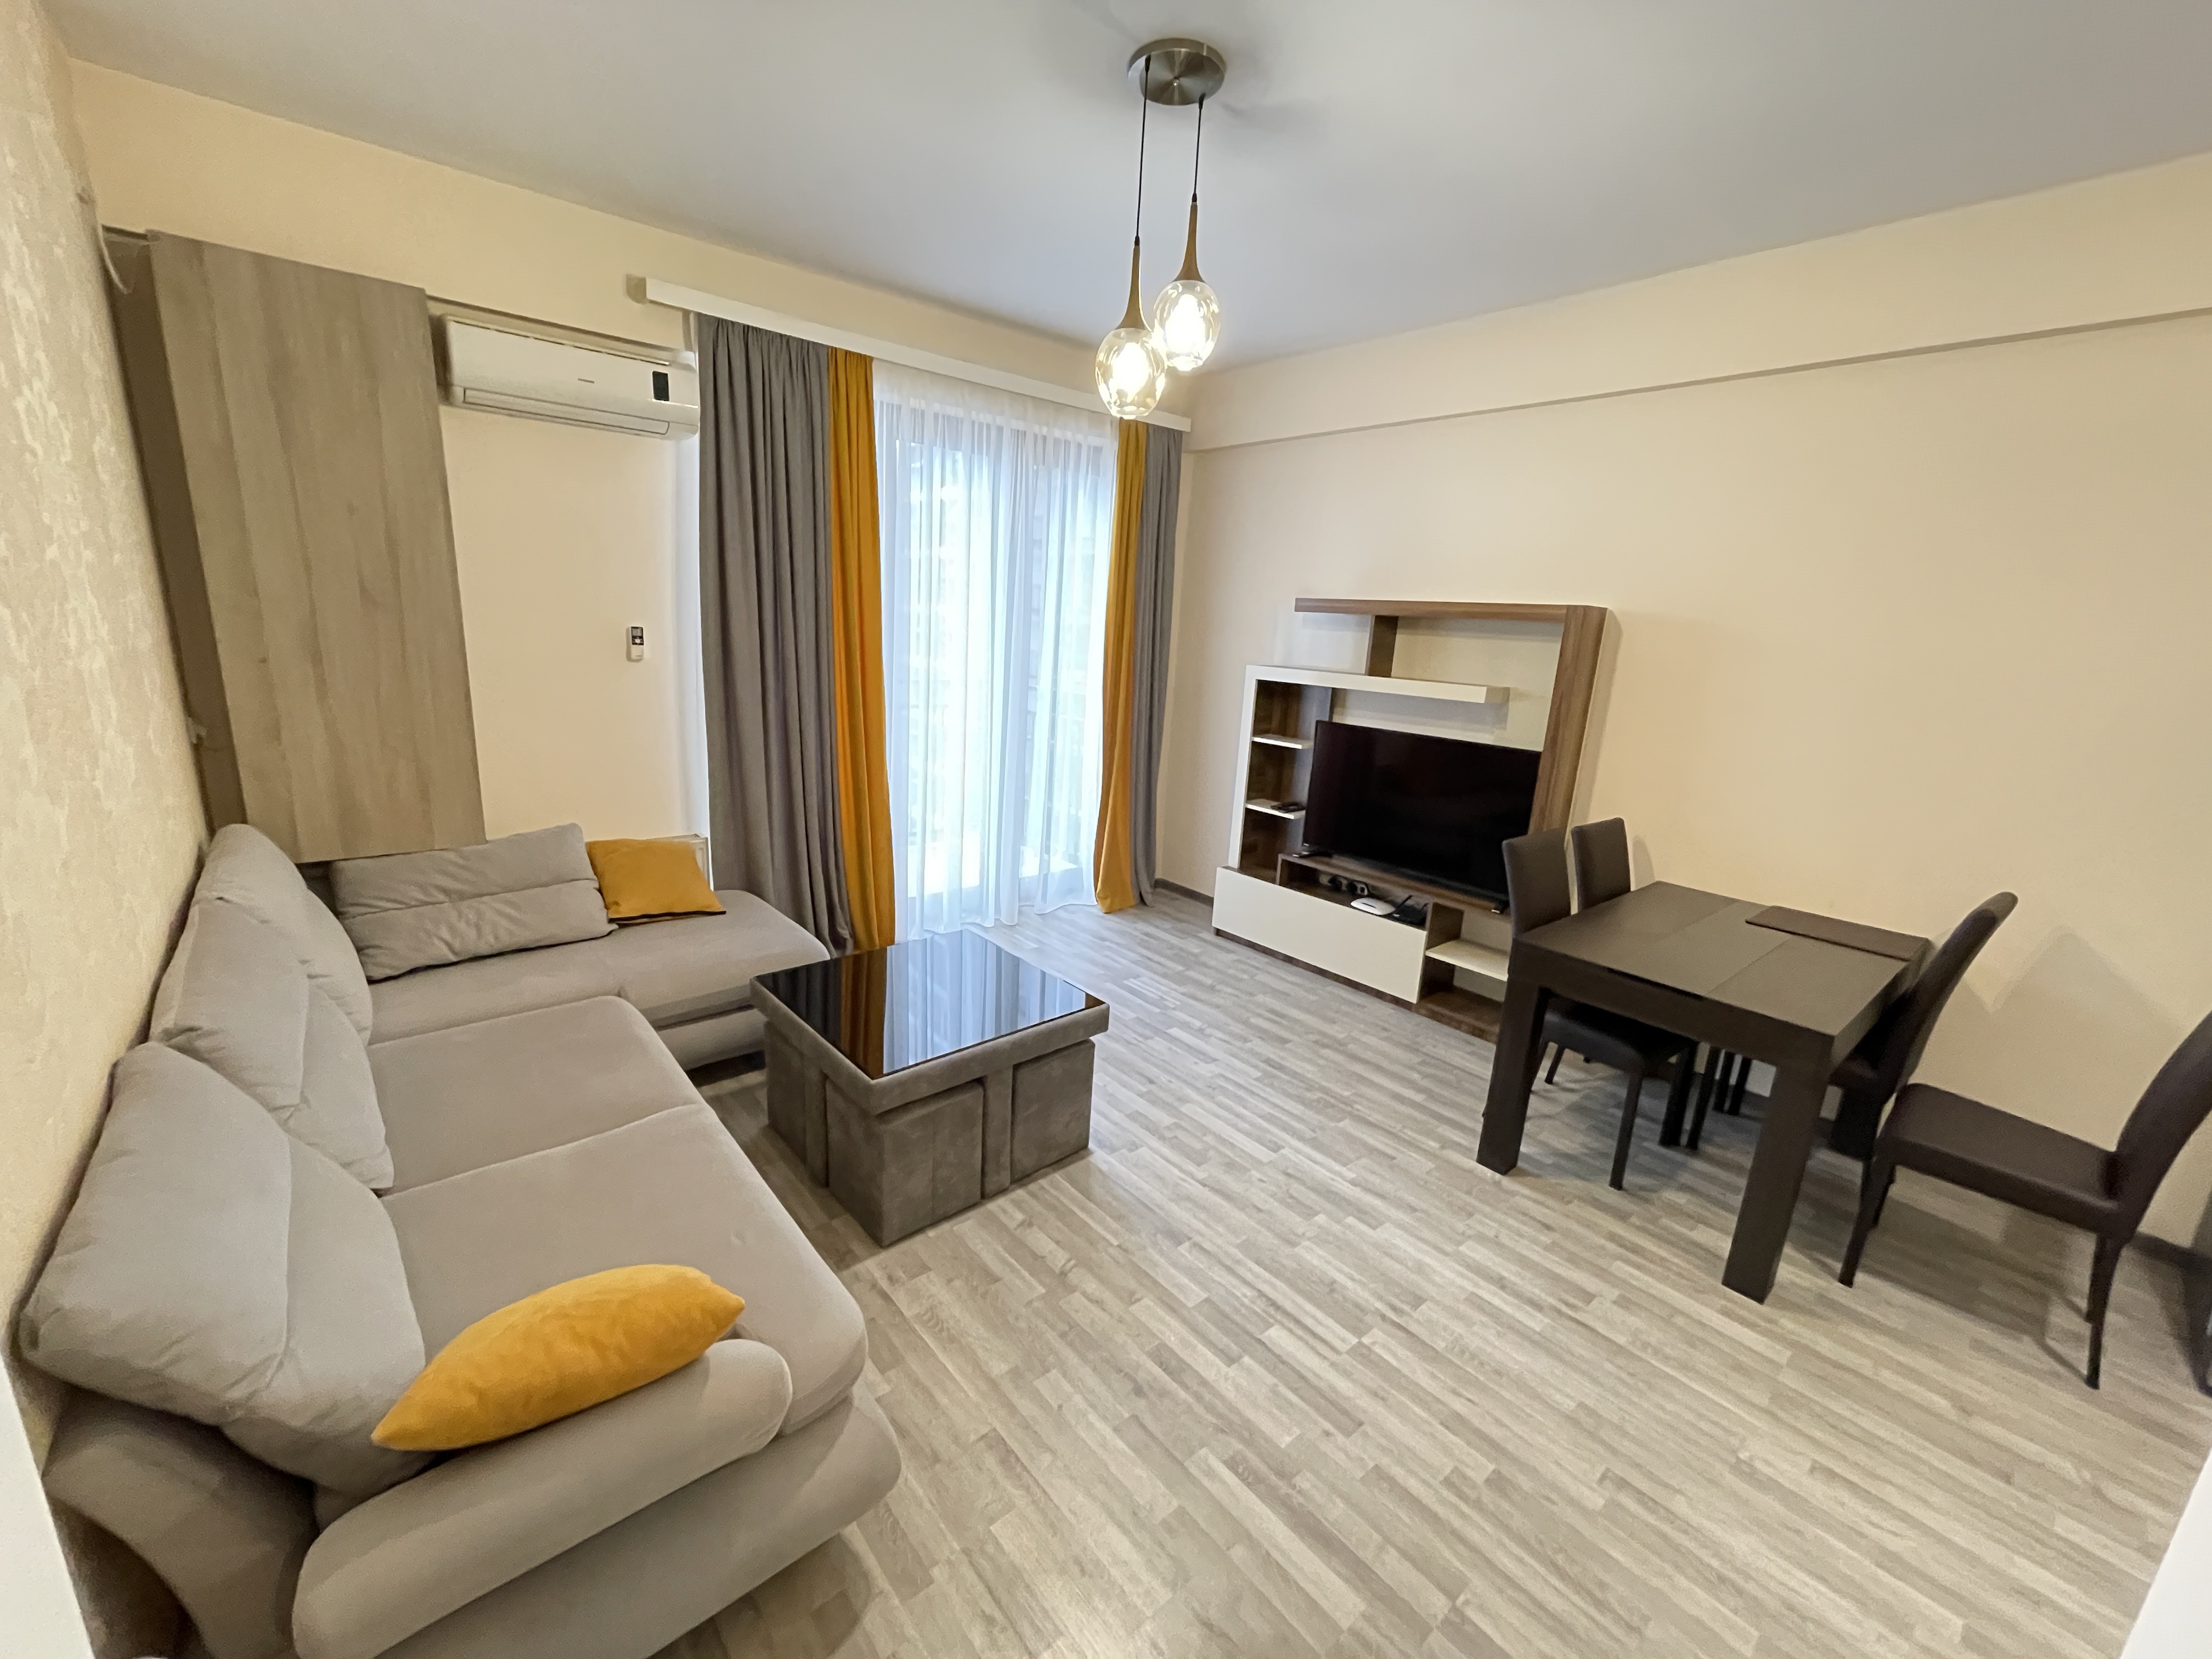 2-Room Apartment For Rent At “M2 Hippodrome”